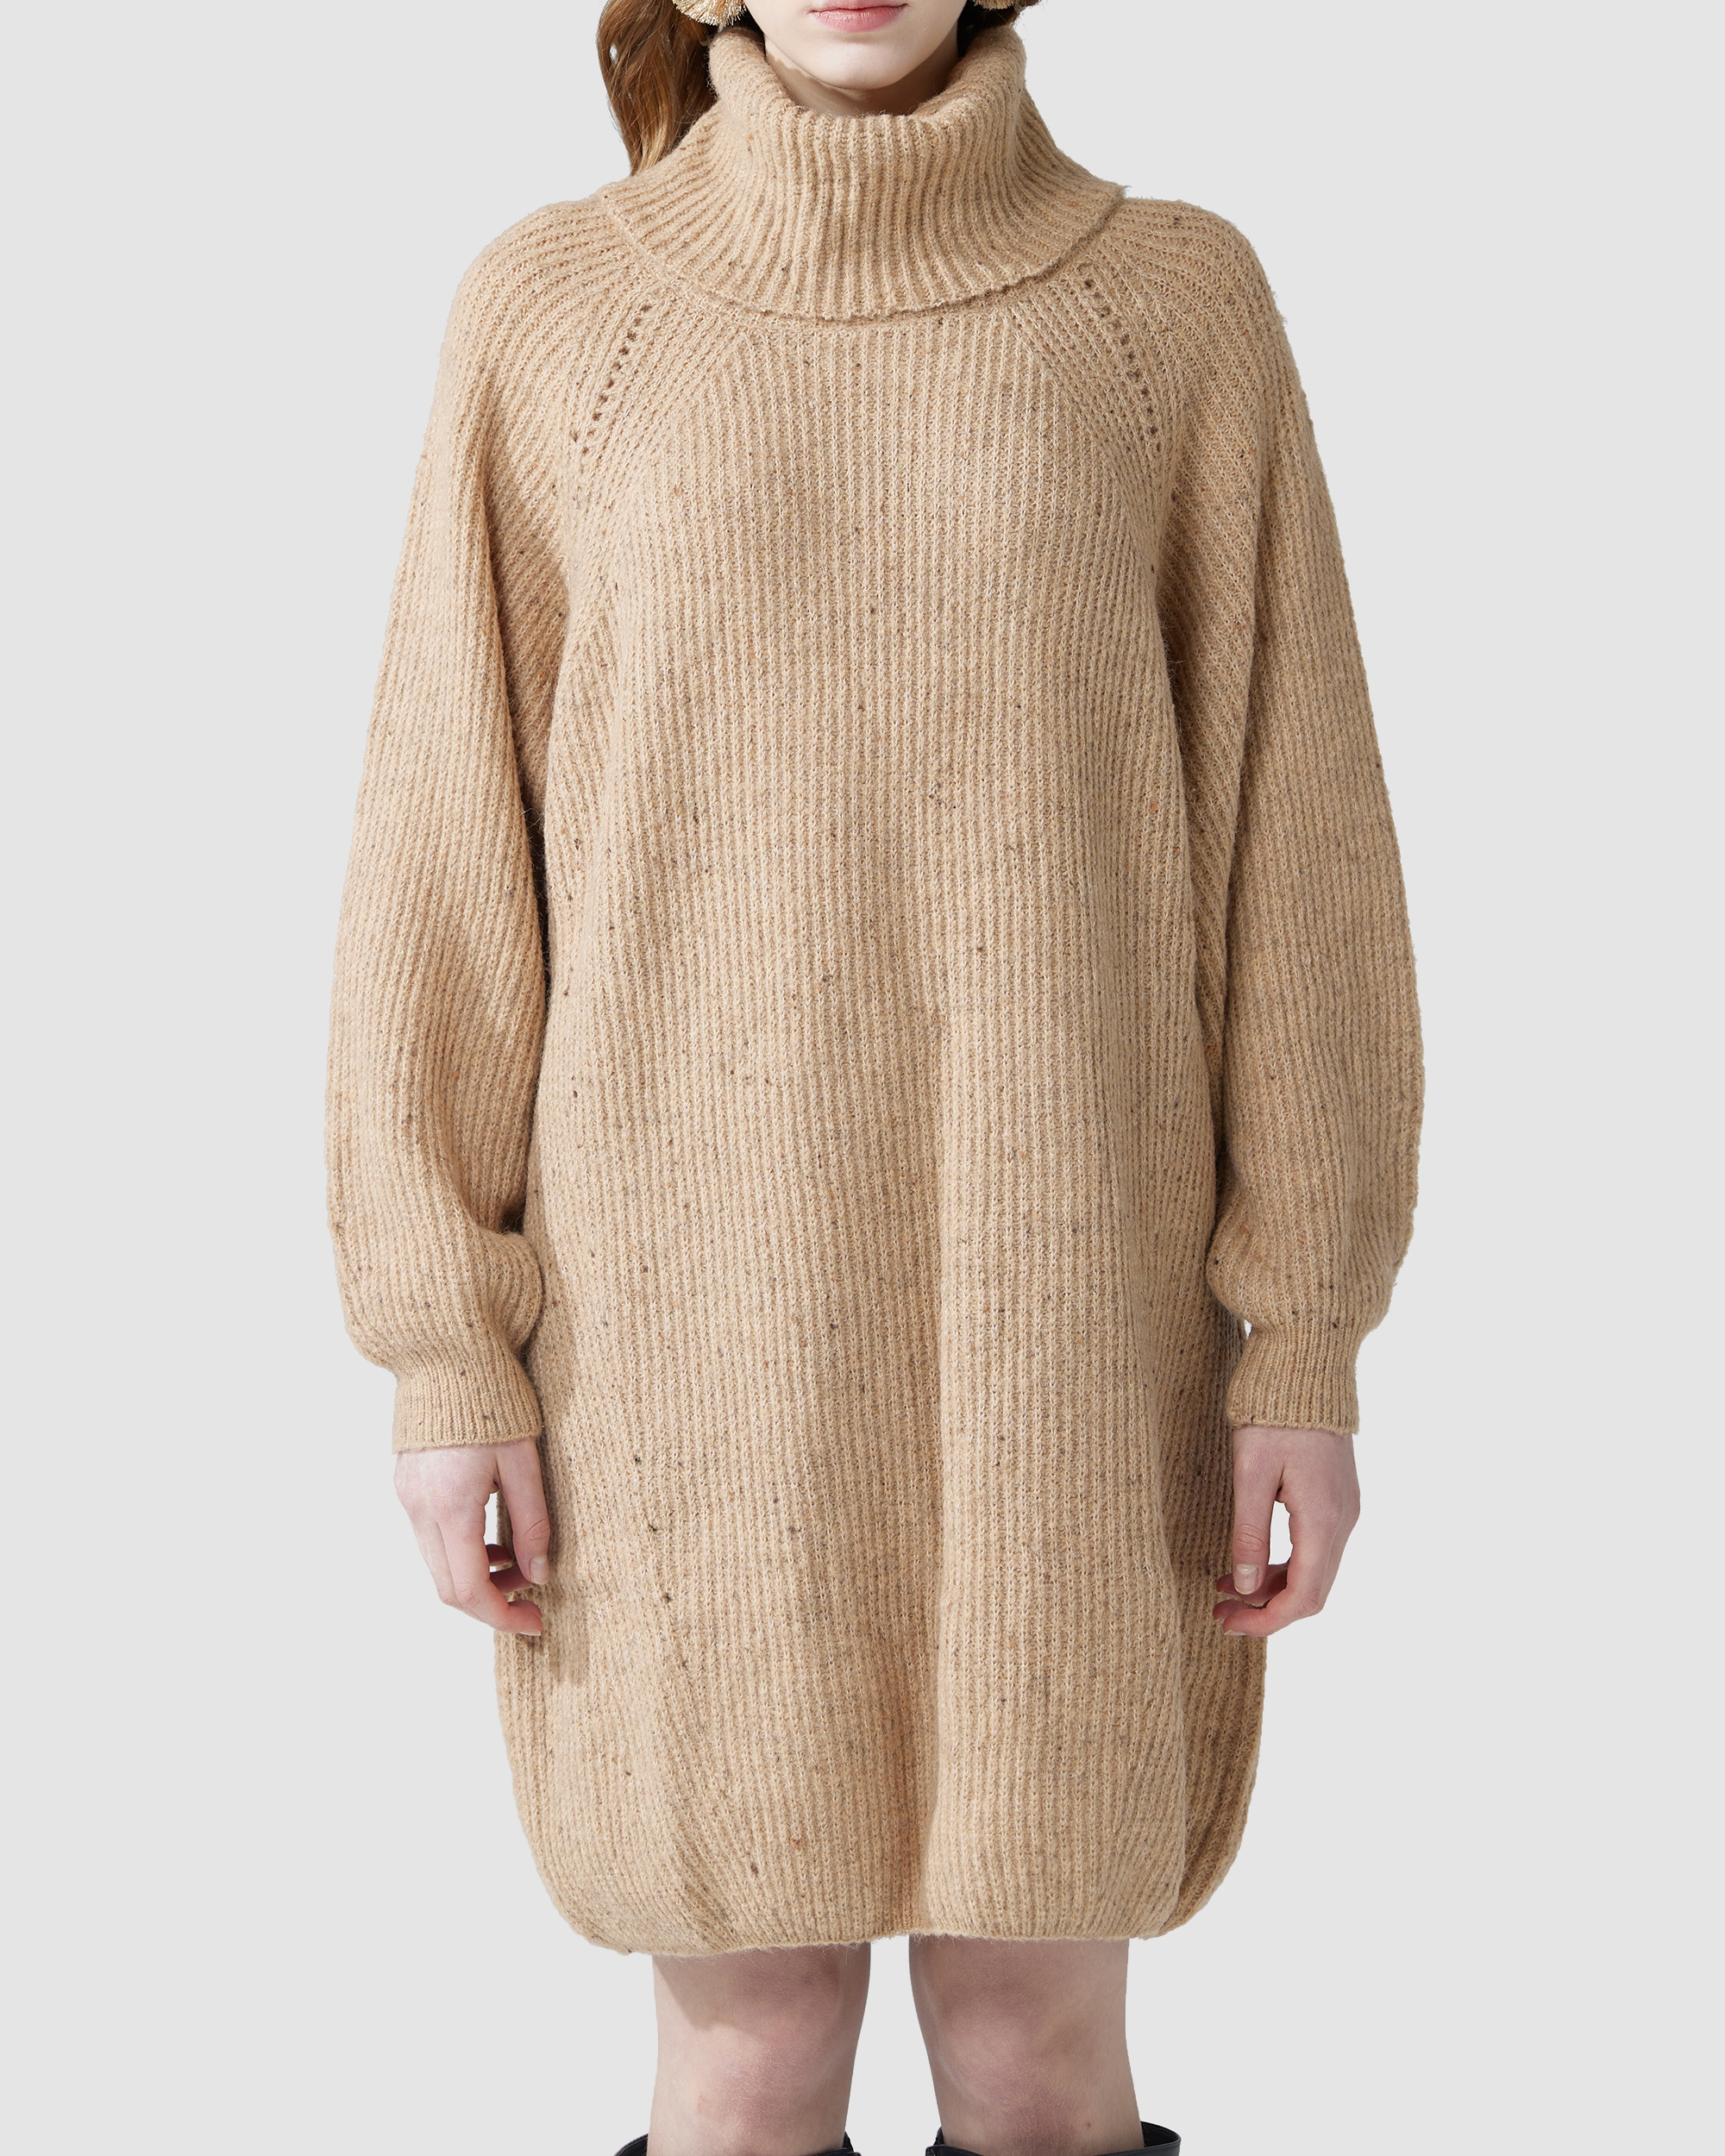 Turtleneck Balloon Sleeve Sweater Dress - Taupe/Brown